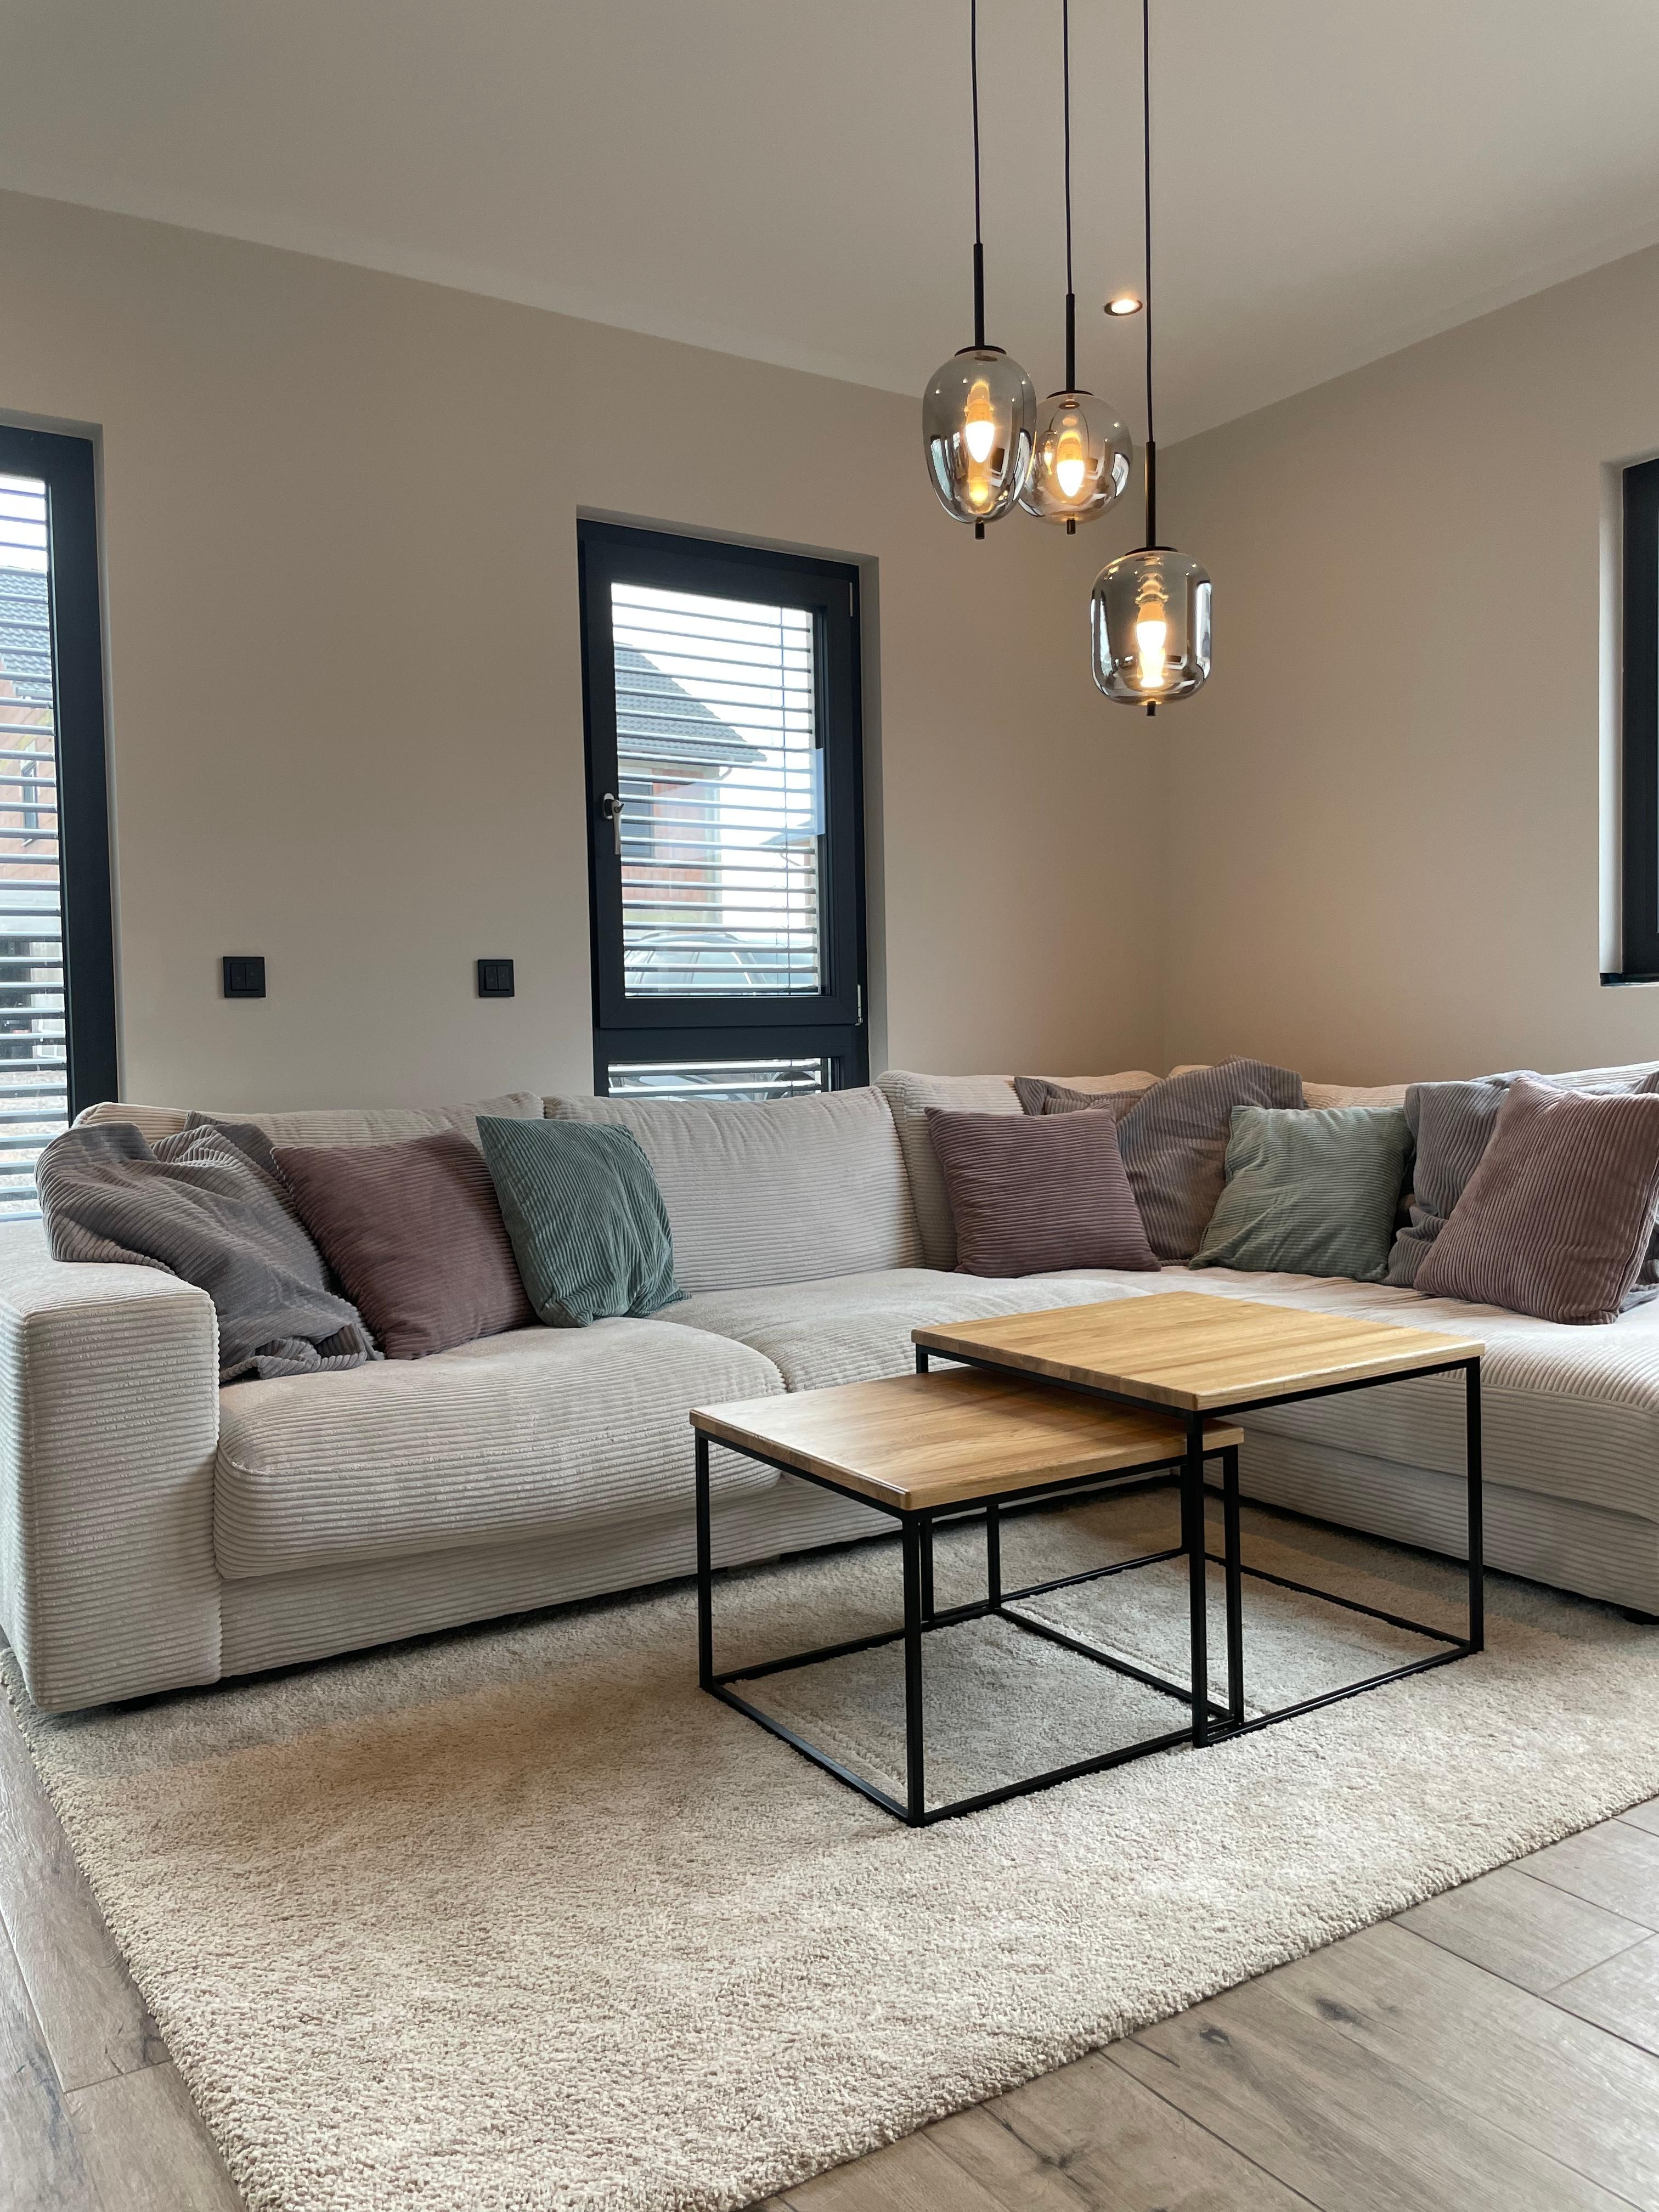 Absolute Couch-Liebe 😍 
#couch #cordsofa #beige #hyggelig #wohnzimmer #interior